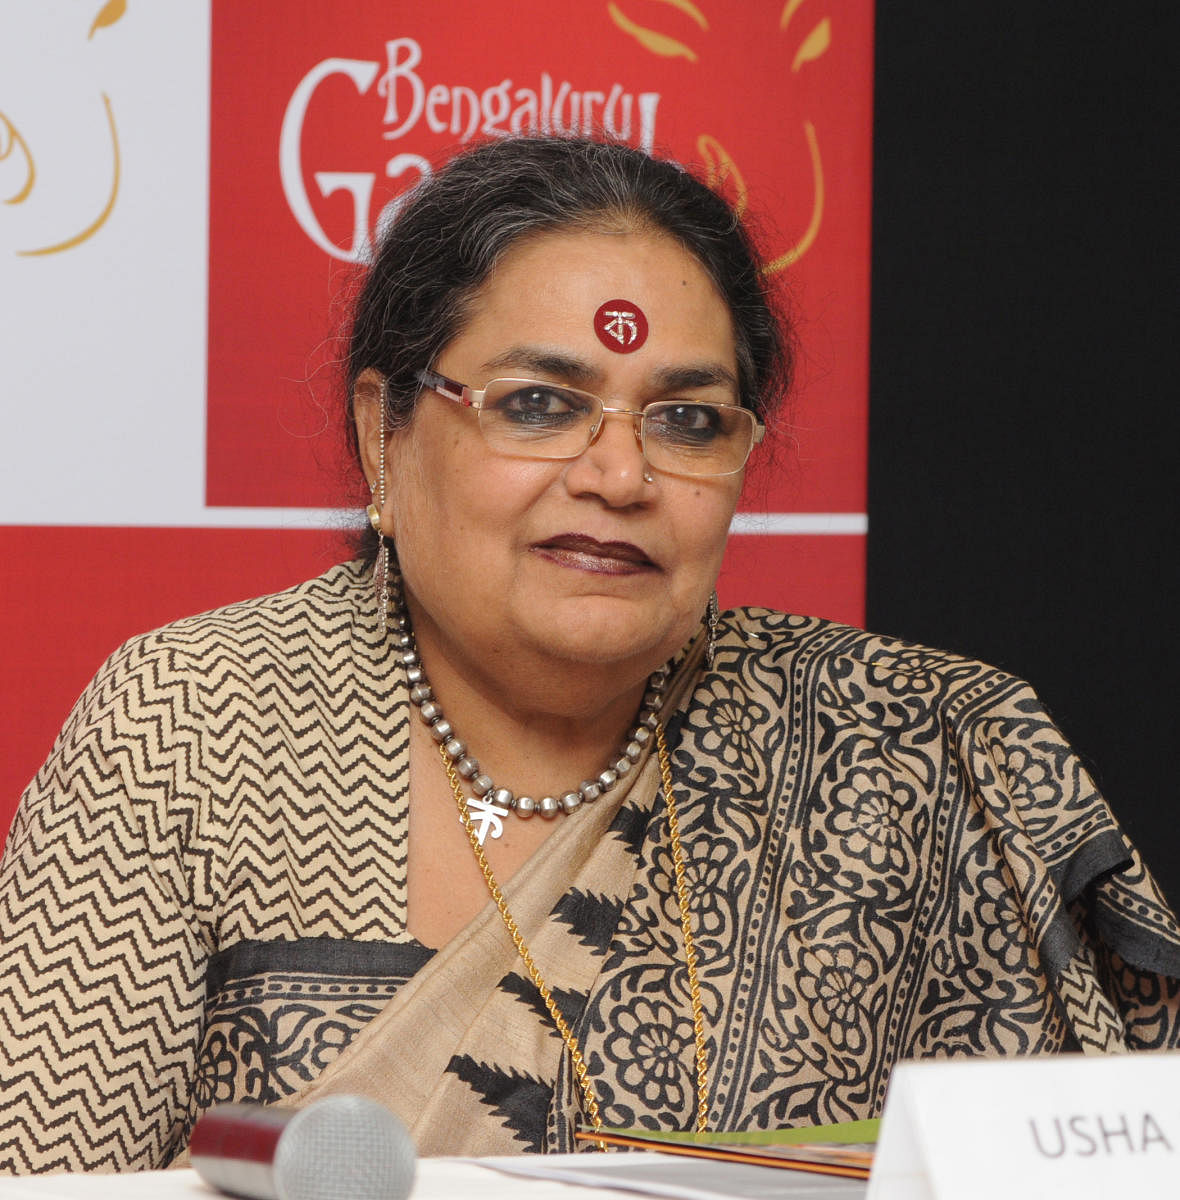 Bindi-saree-bangle look not deliberate decision: Uthup